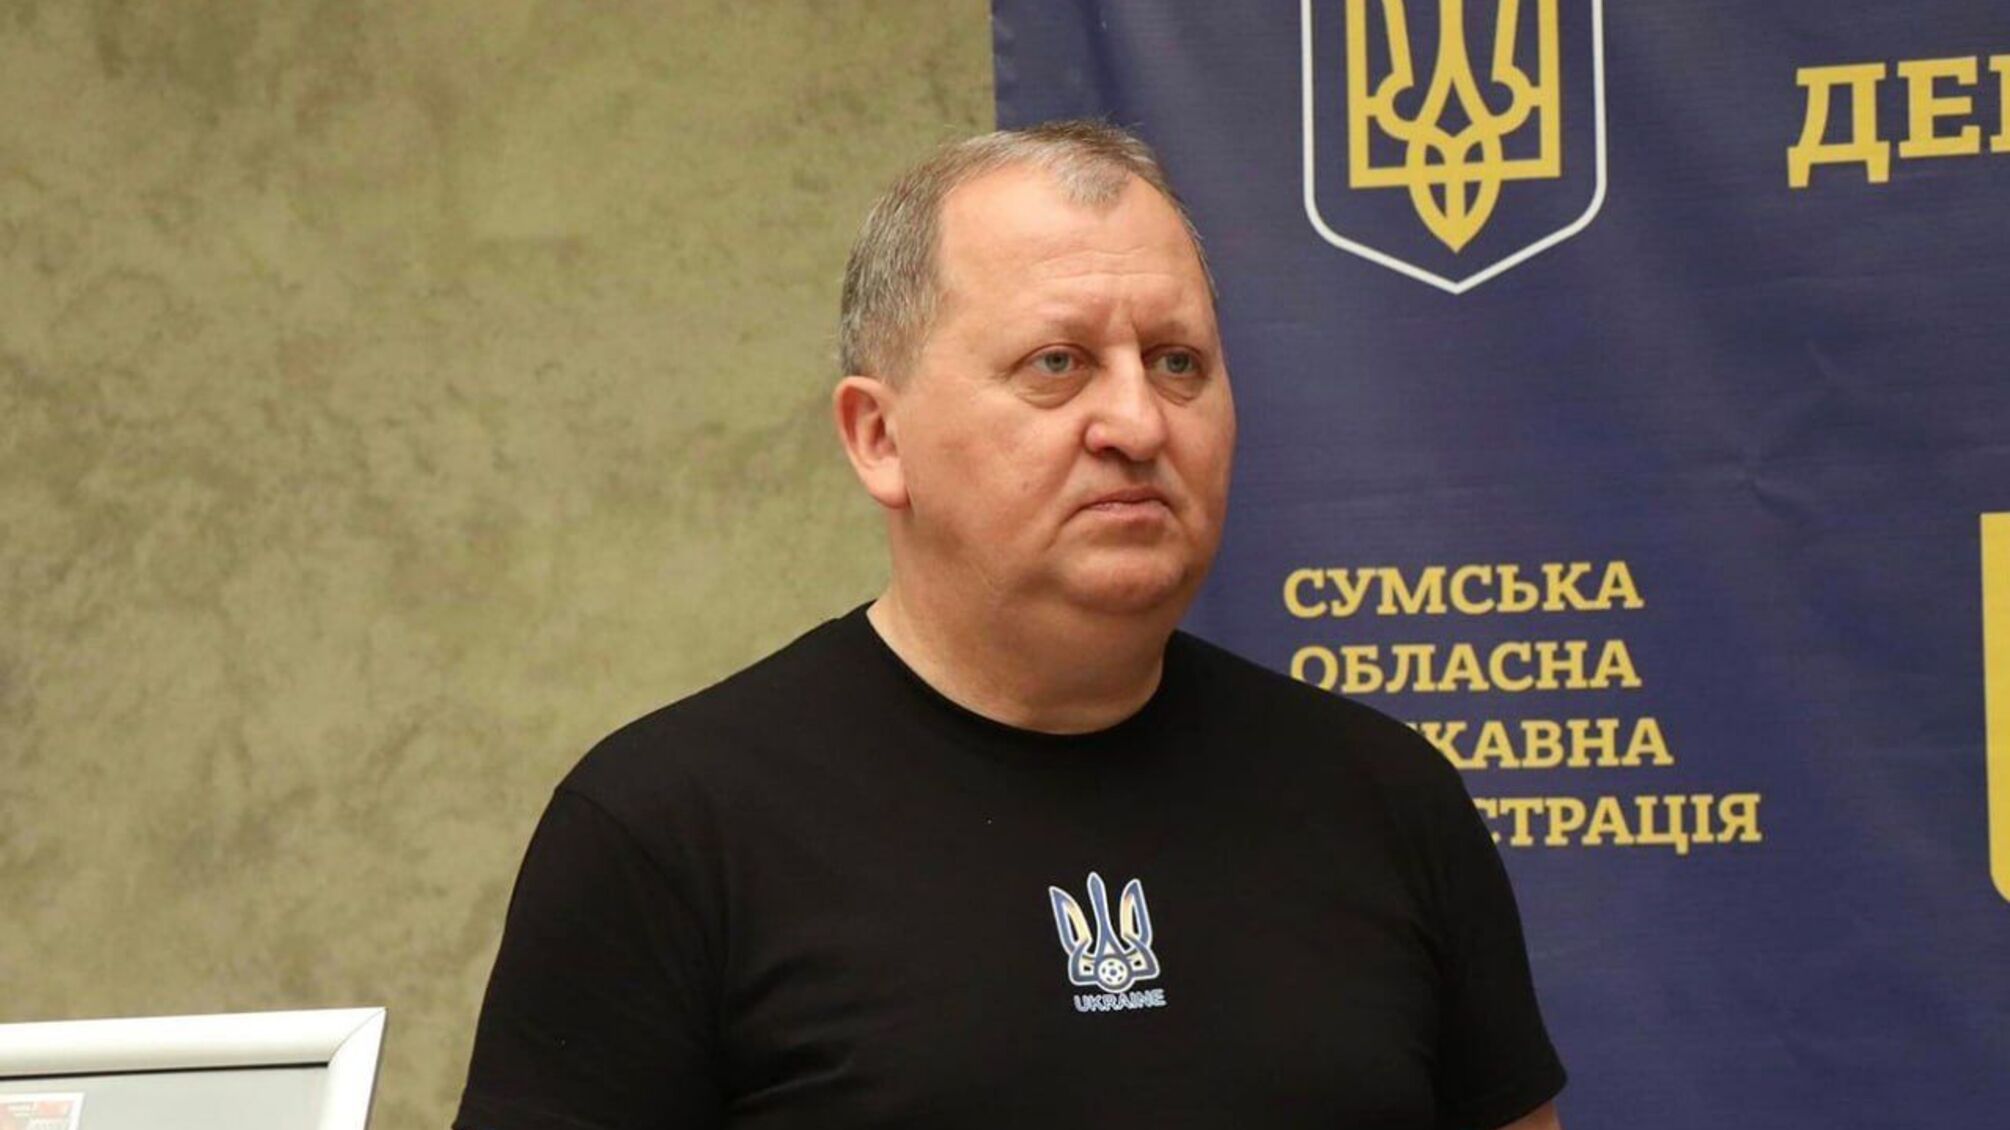 Мэра Сум Александра Лысенко выпустили под залог